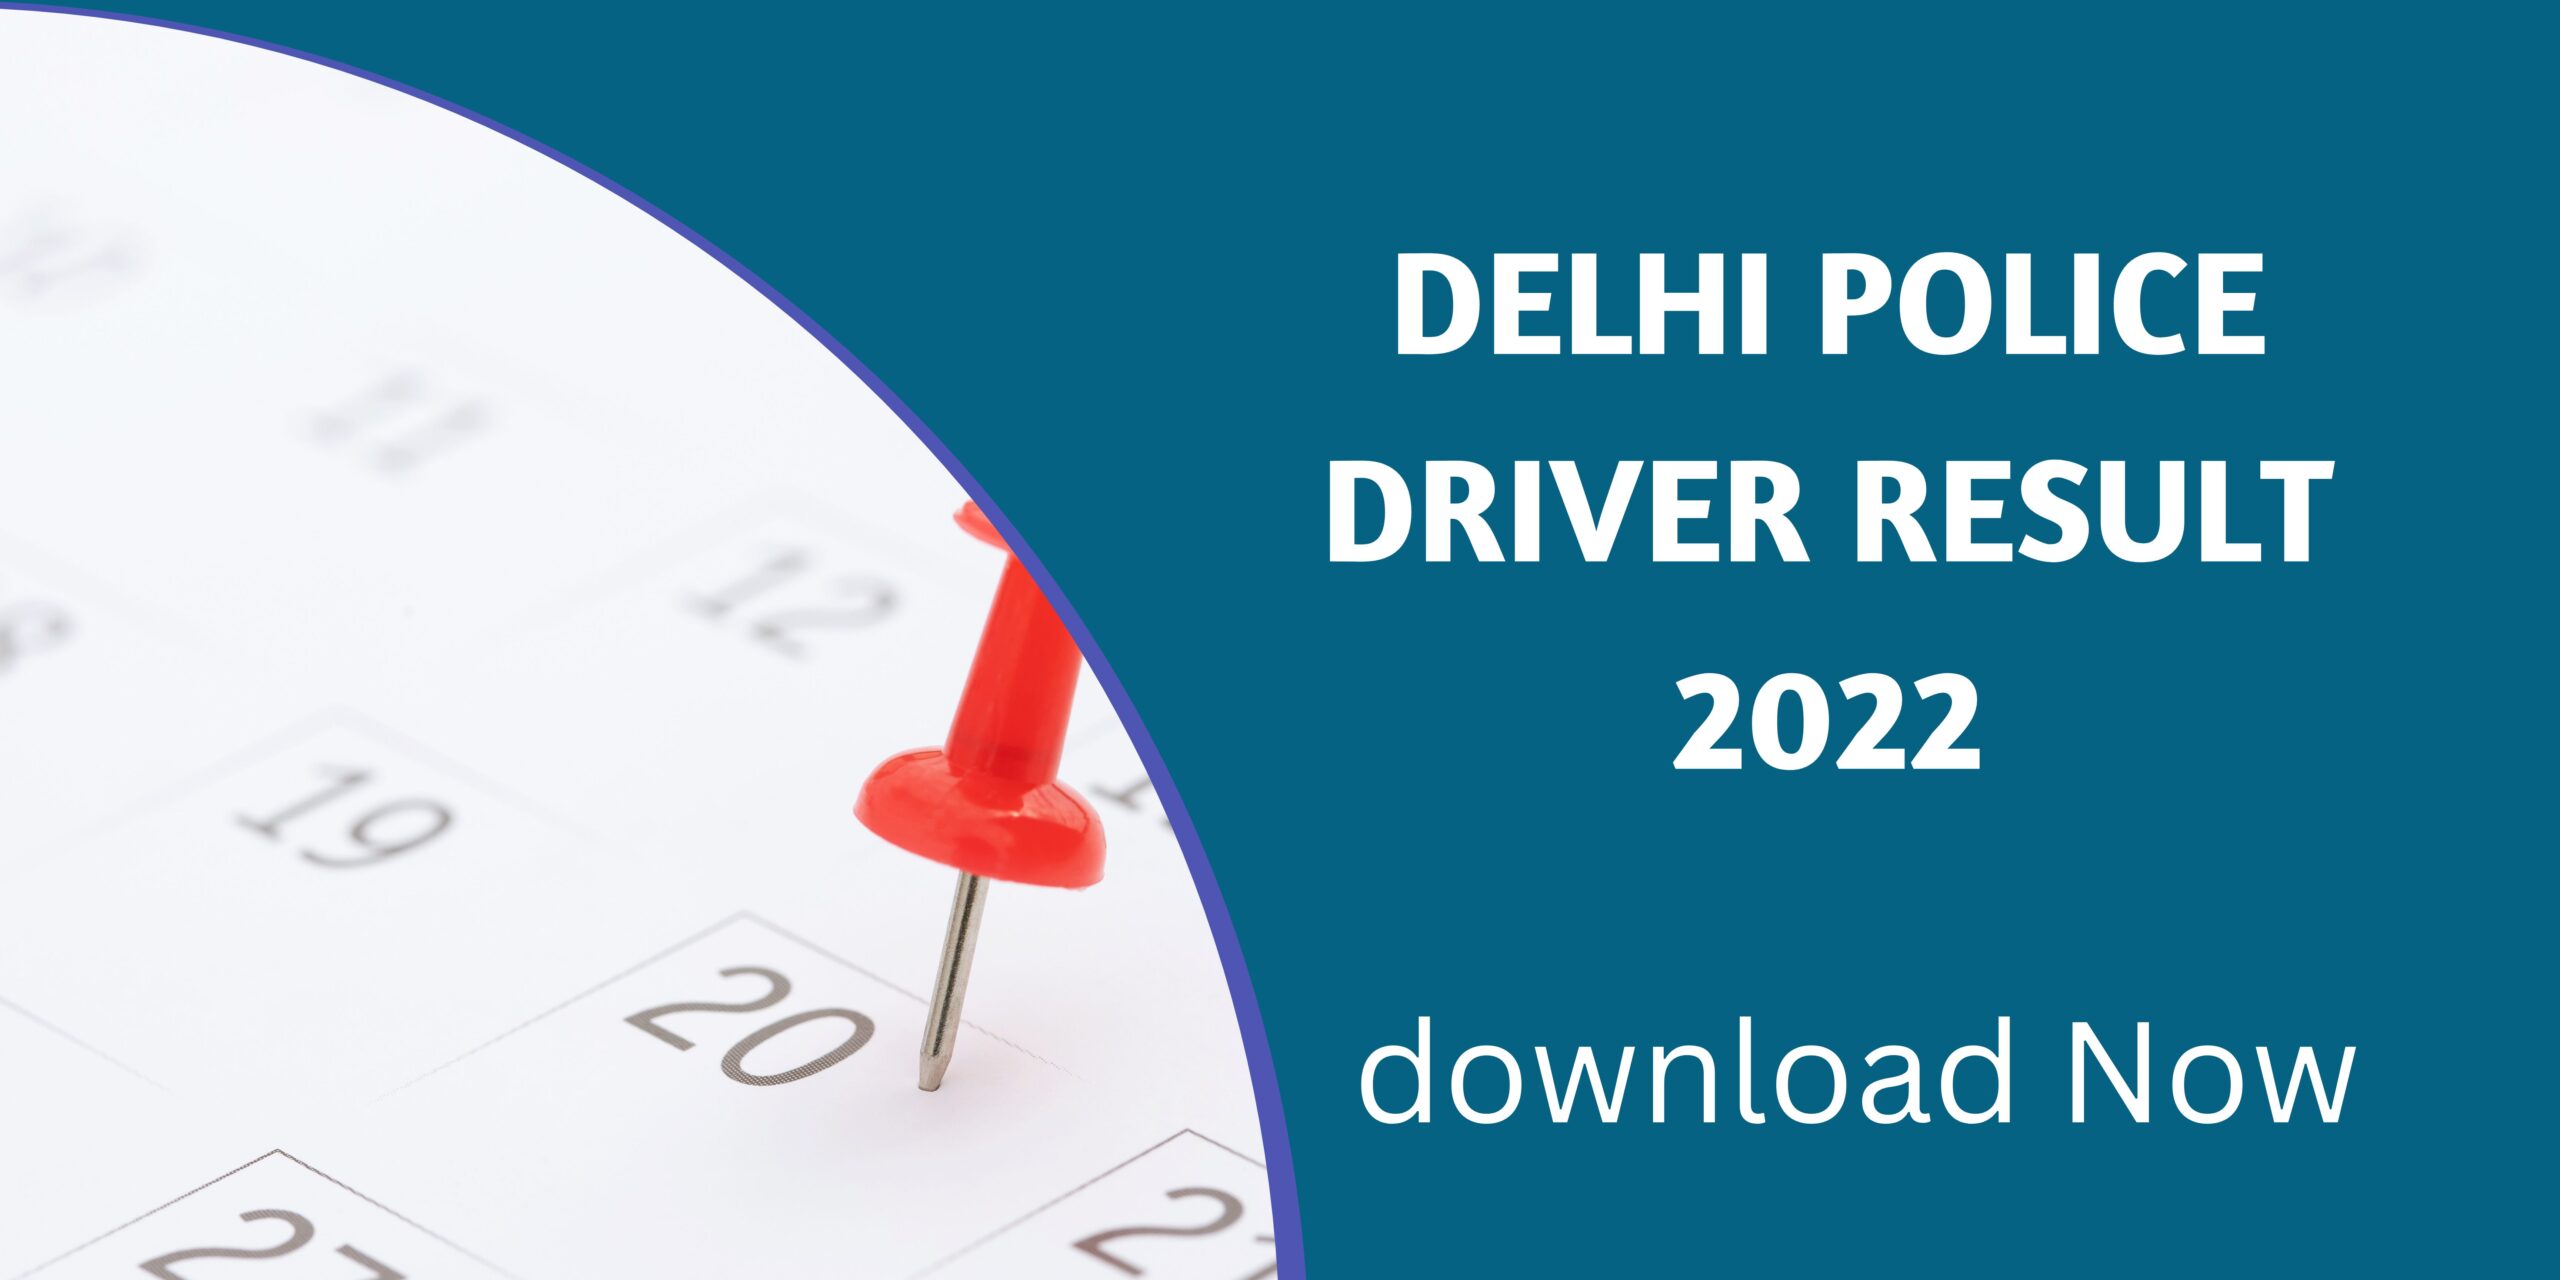 Delhi Police Driver Result 2022